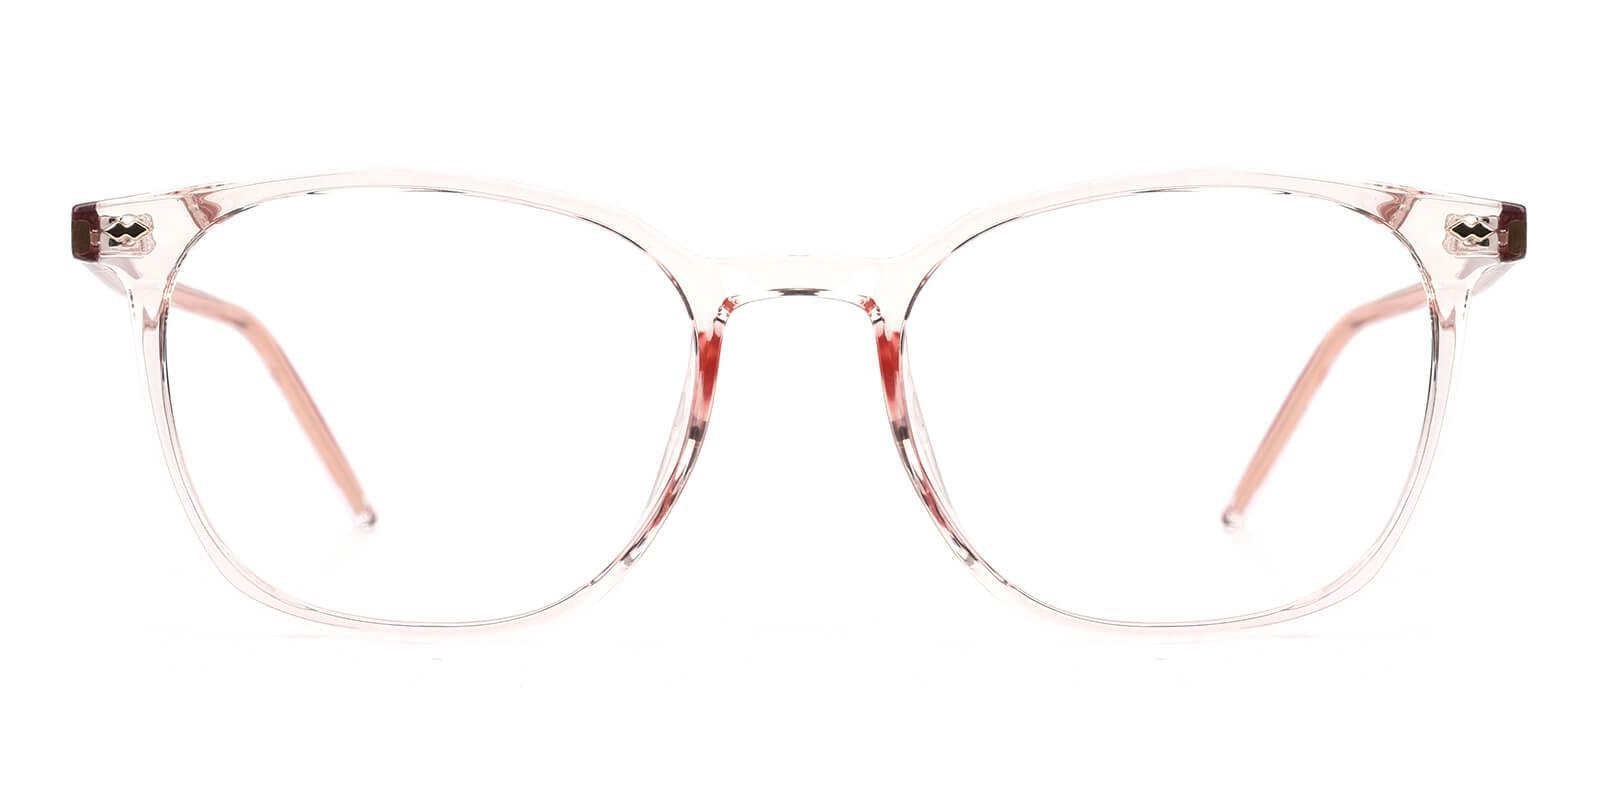 Prodigy Pink Acetate Eyeglasses , SpringHinges , UniversalBridgeFit Frames from ABBE Glasses